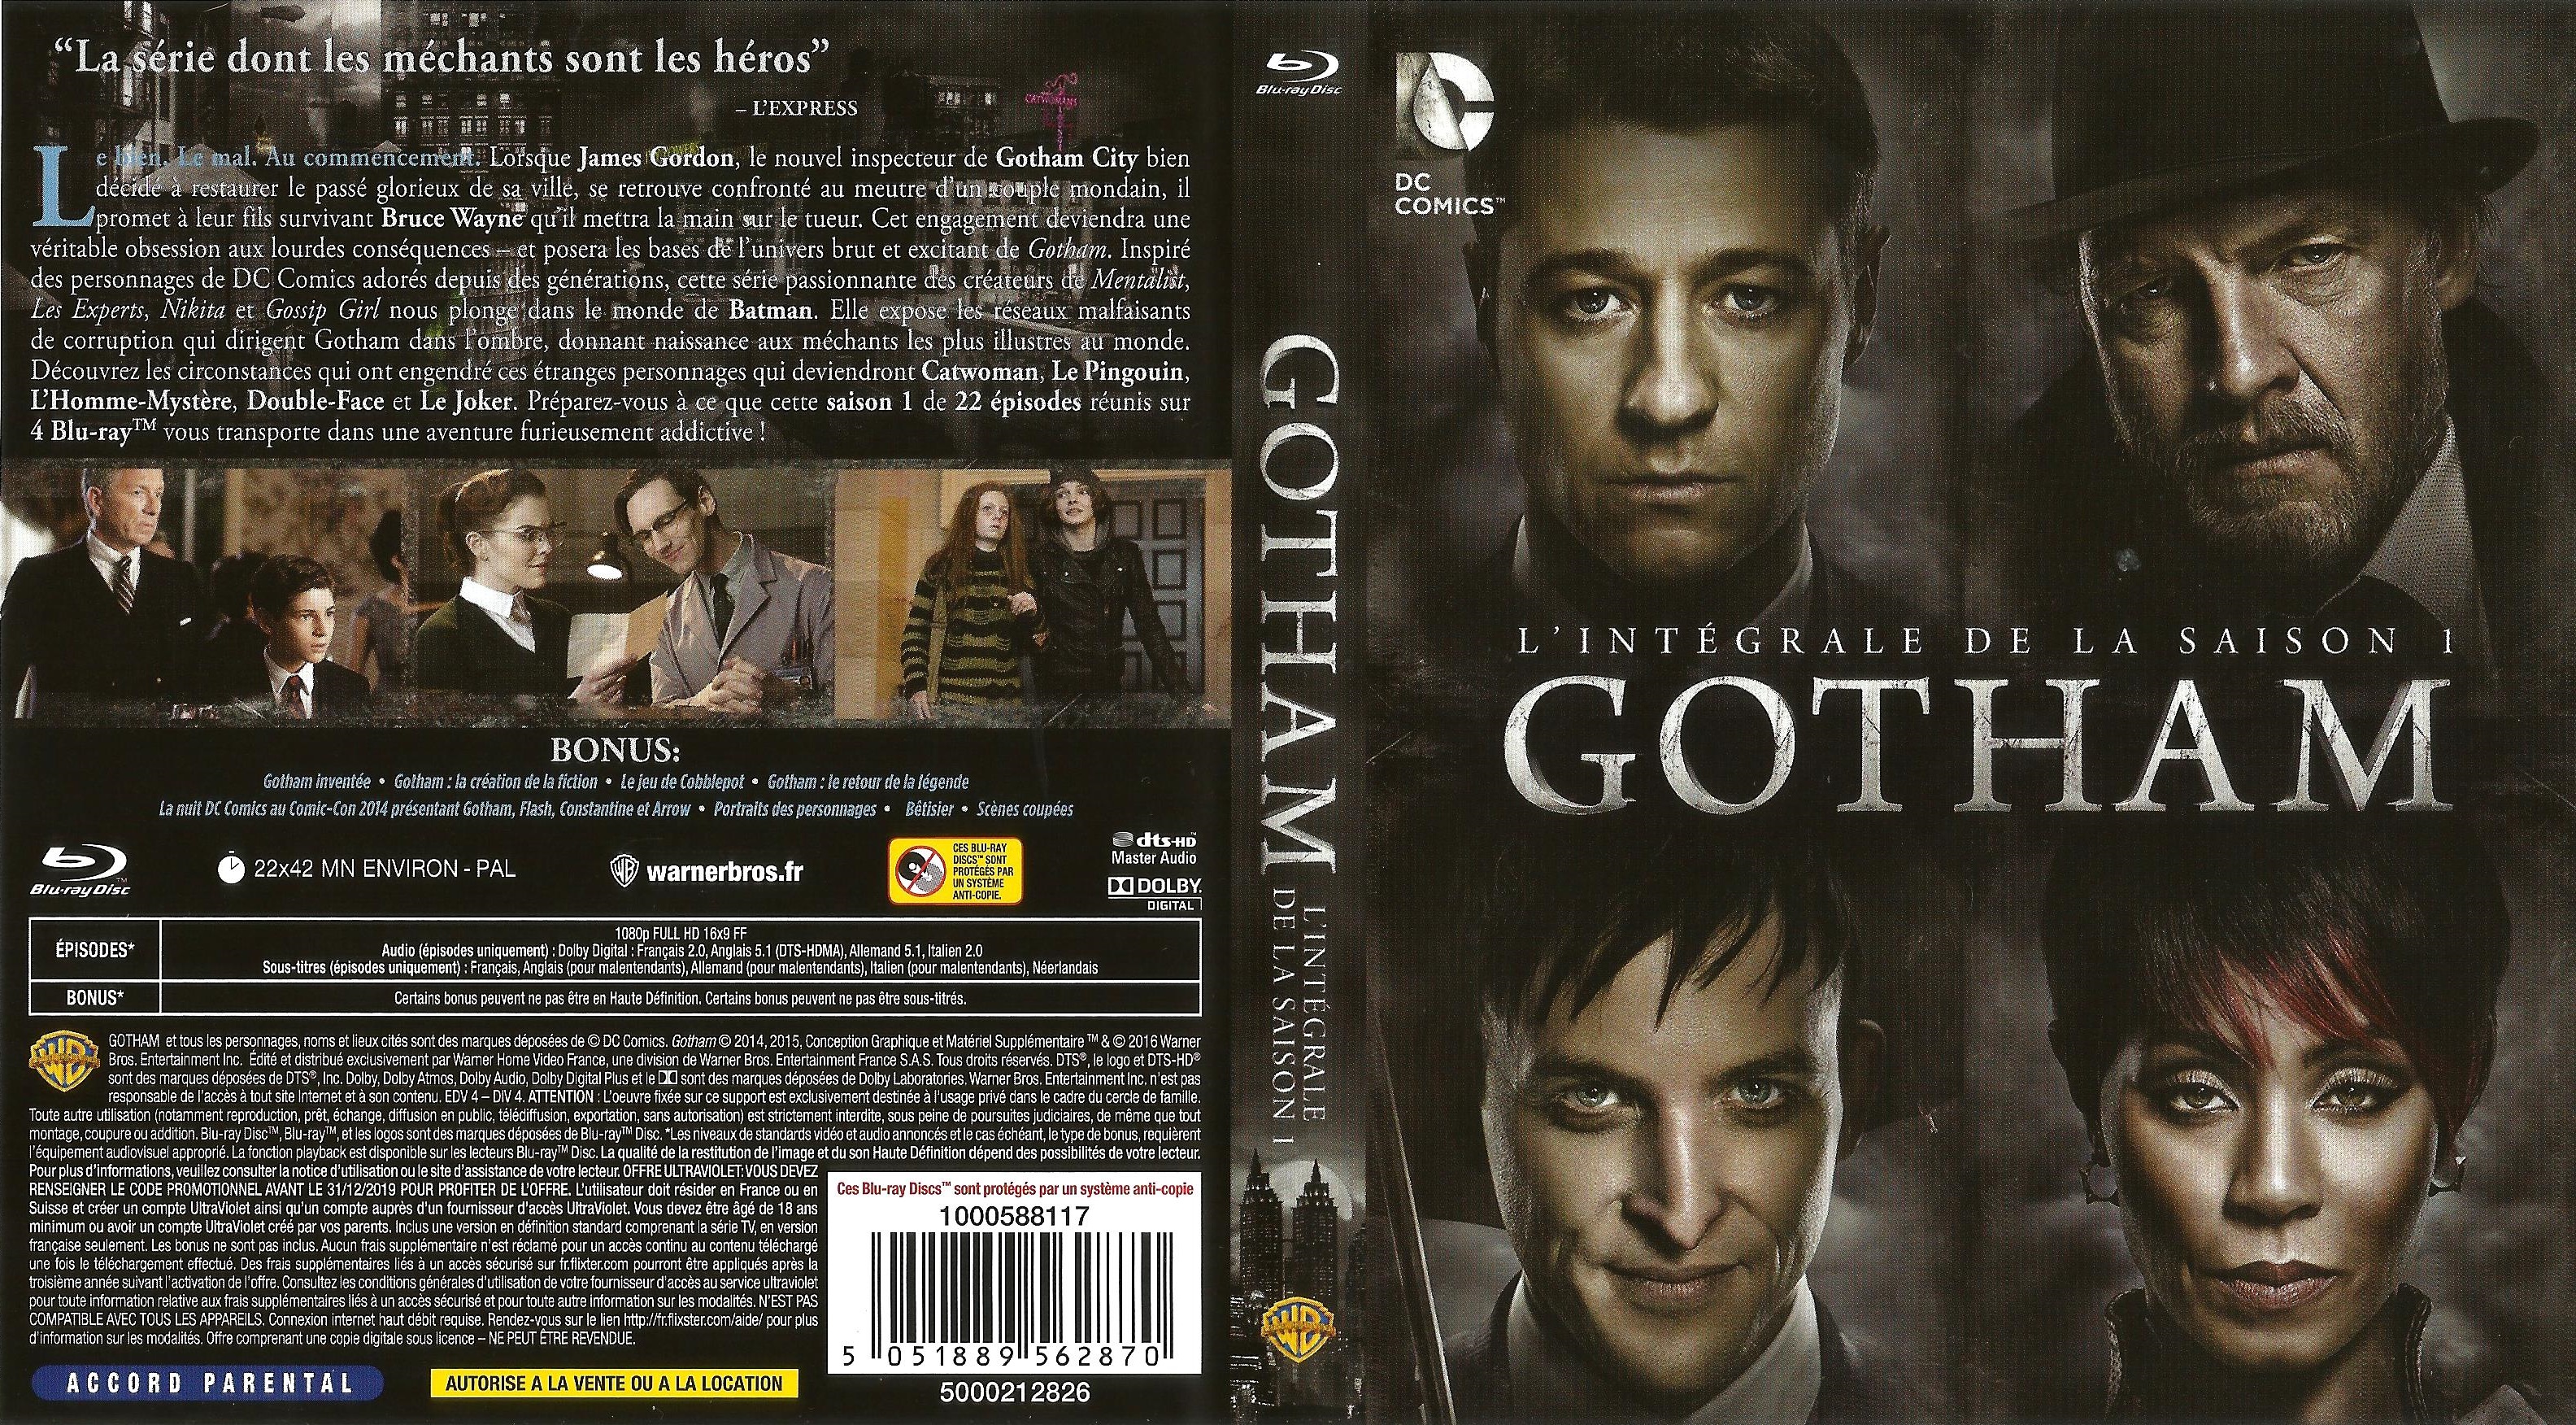 Jaquette DVD Gotham saison 1 (BLU-RAY)